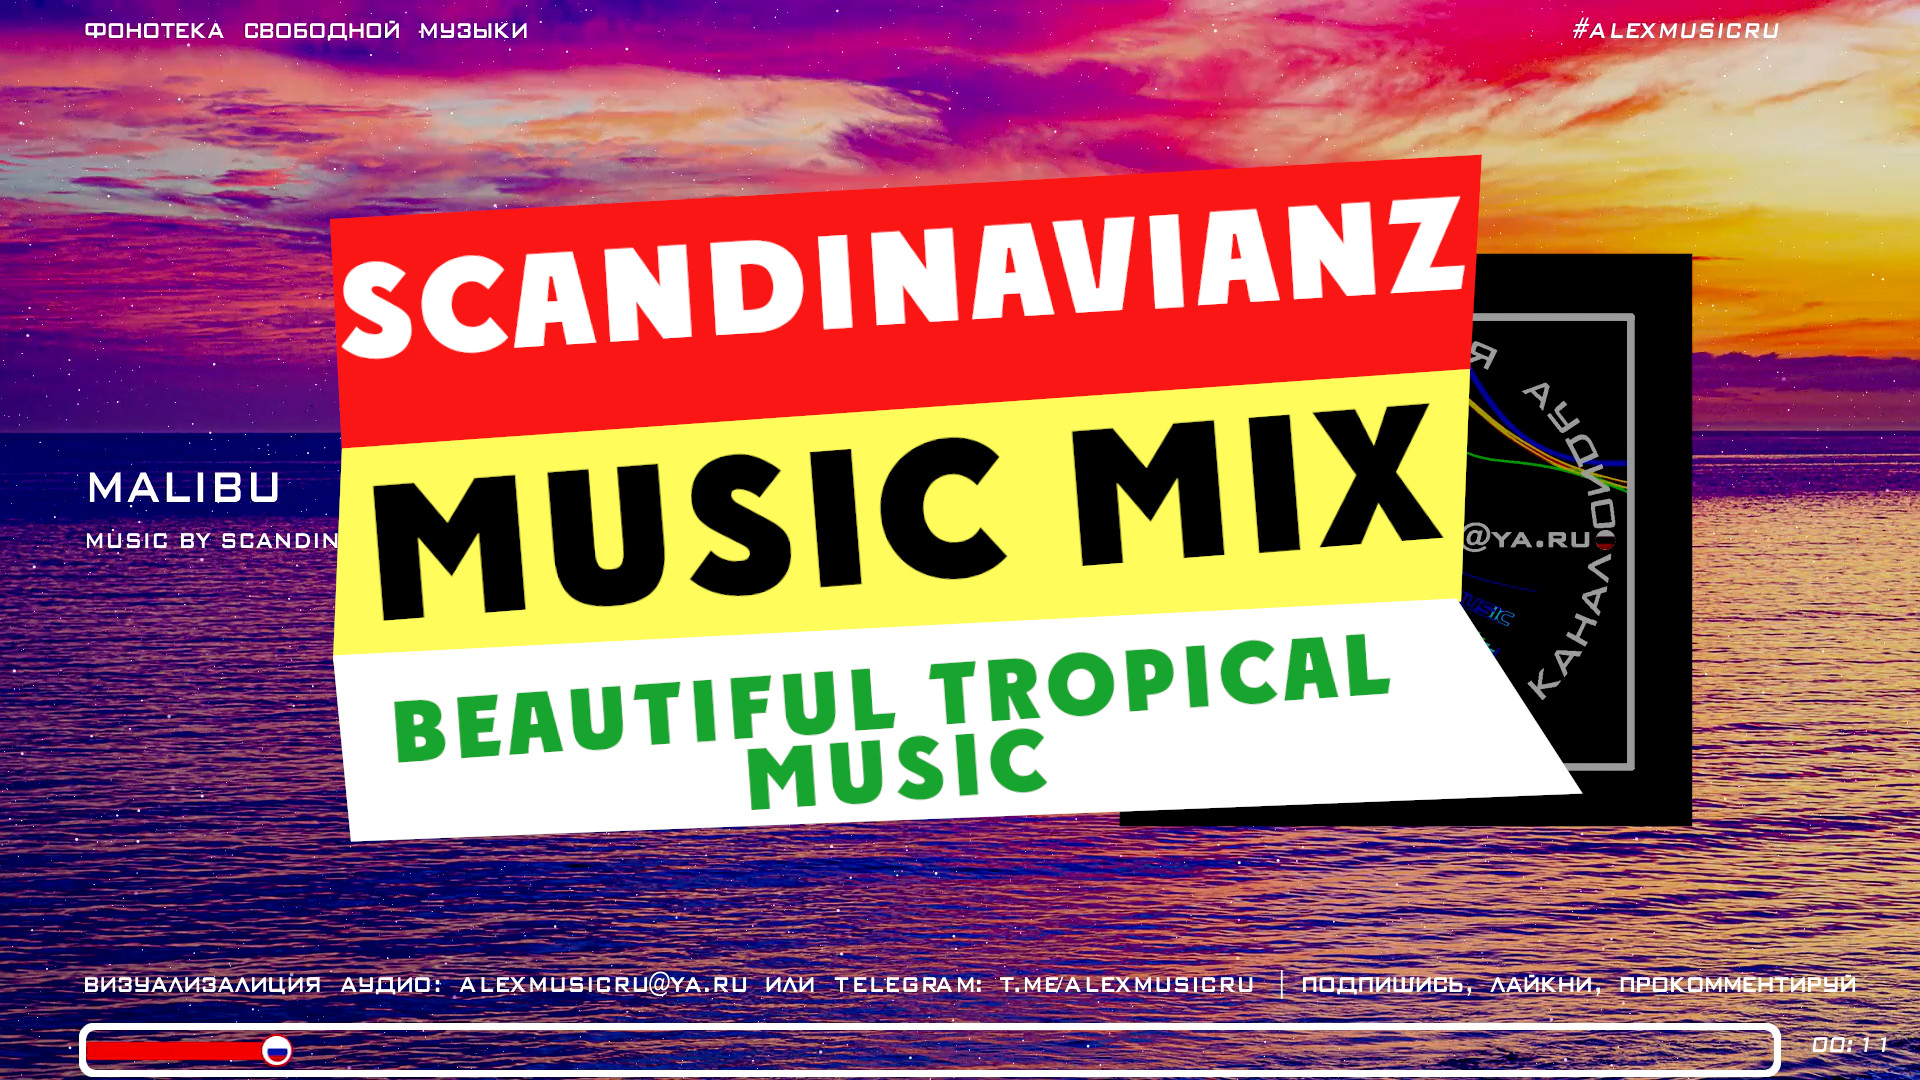 Scandinavianz Music Mix | Фонотека бесплатной музыки